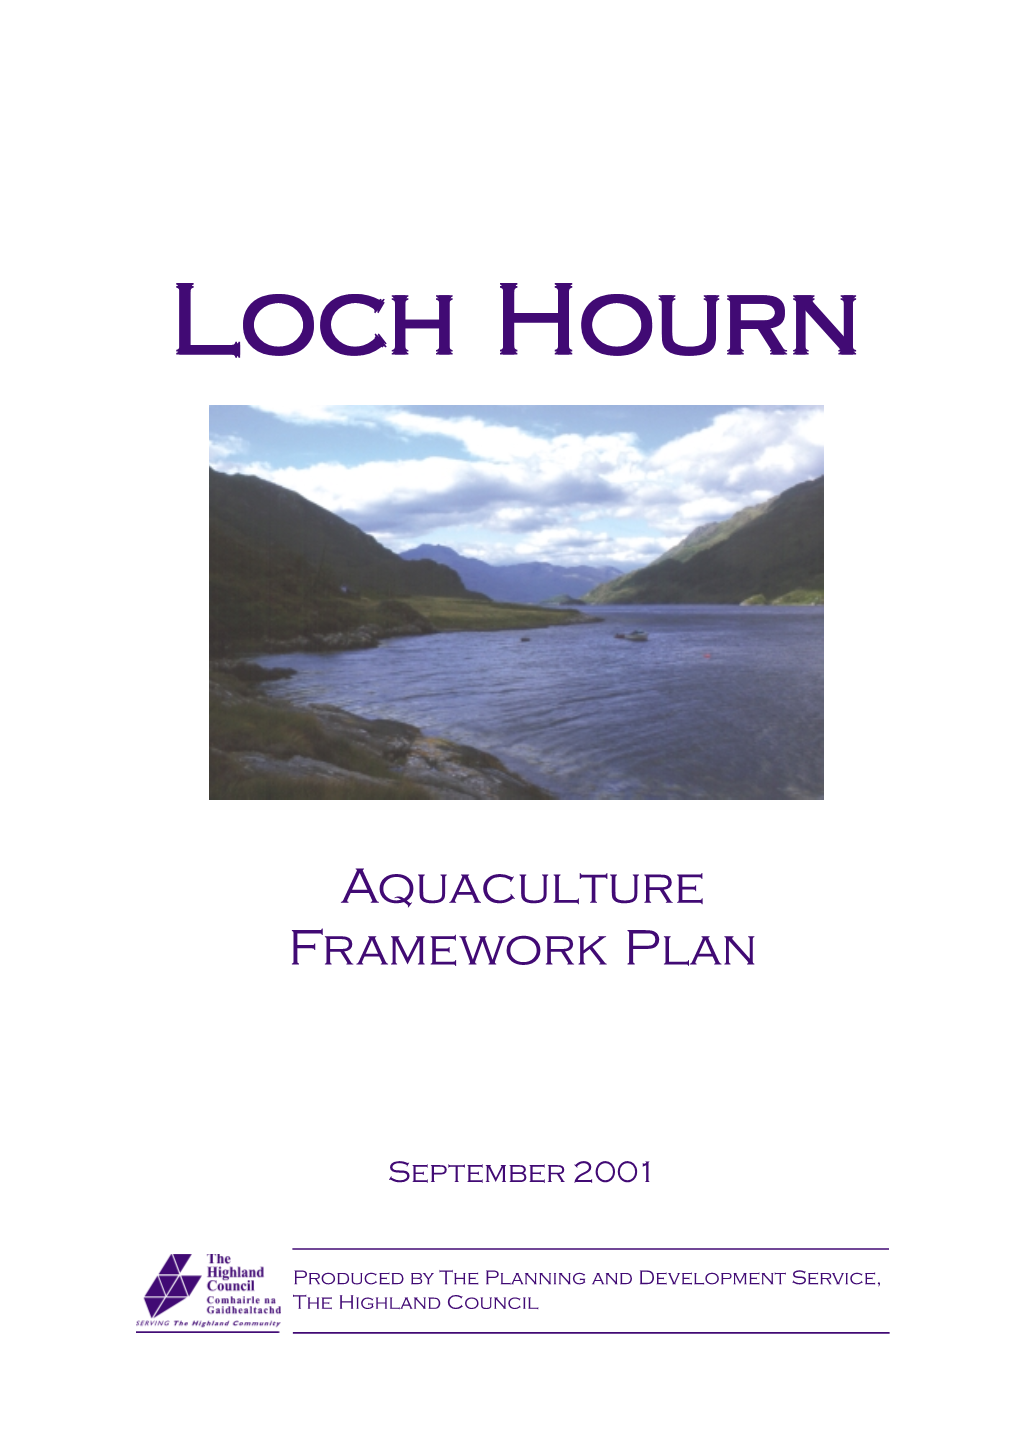 Loch Hourn Aquaculture Framework Plan Contents